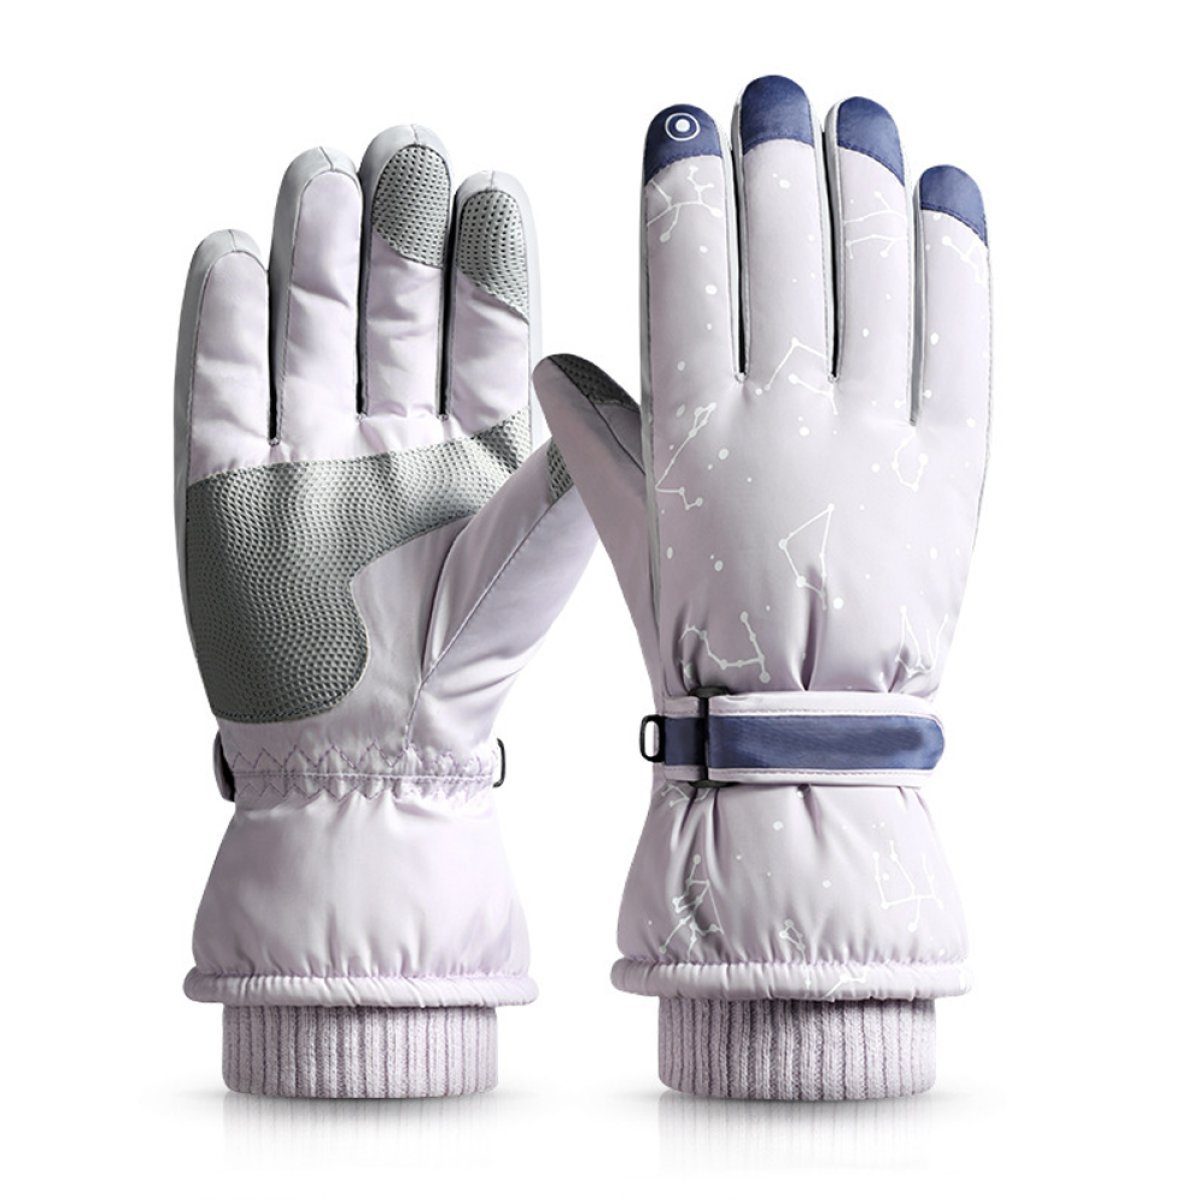 JedBesetzt Skihandschuhe Ski Handschuhe,Winter Snow Skihandschuhe,Winddicht,Wasserdicht violett | Sporthandschuhe